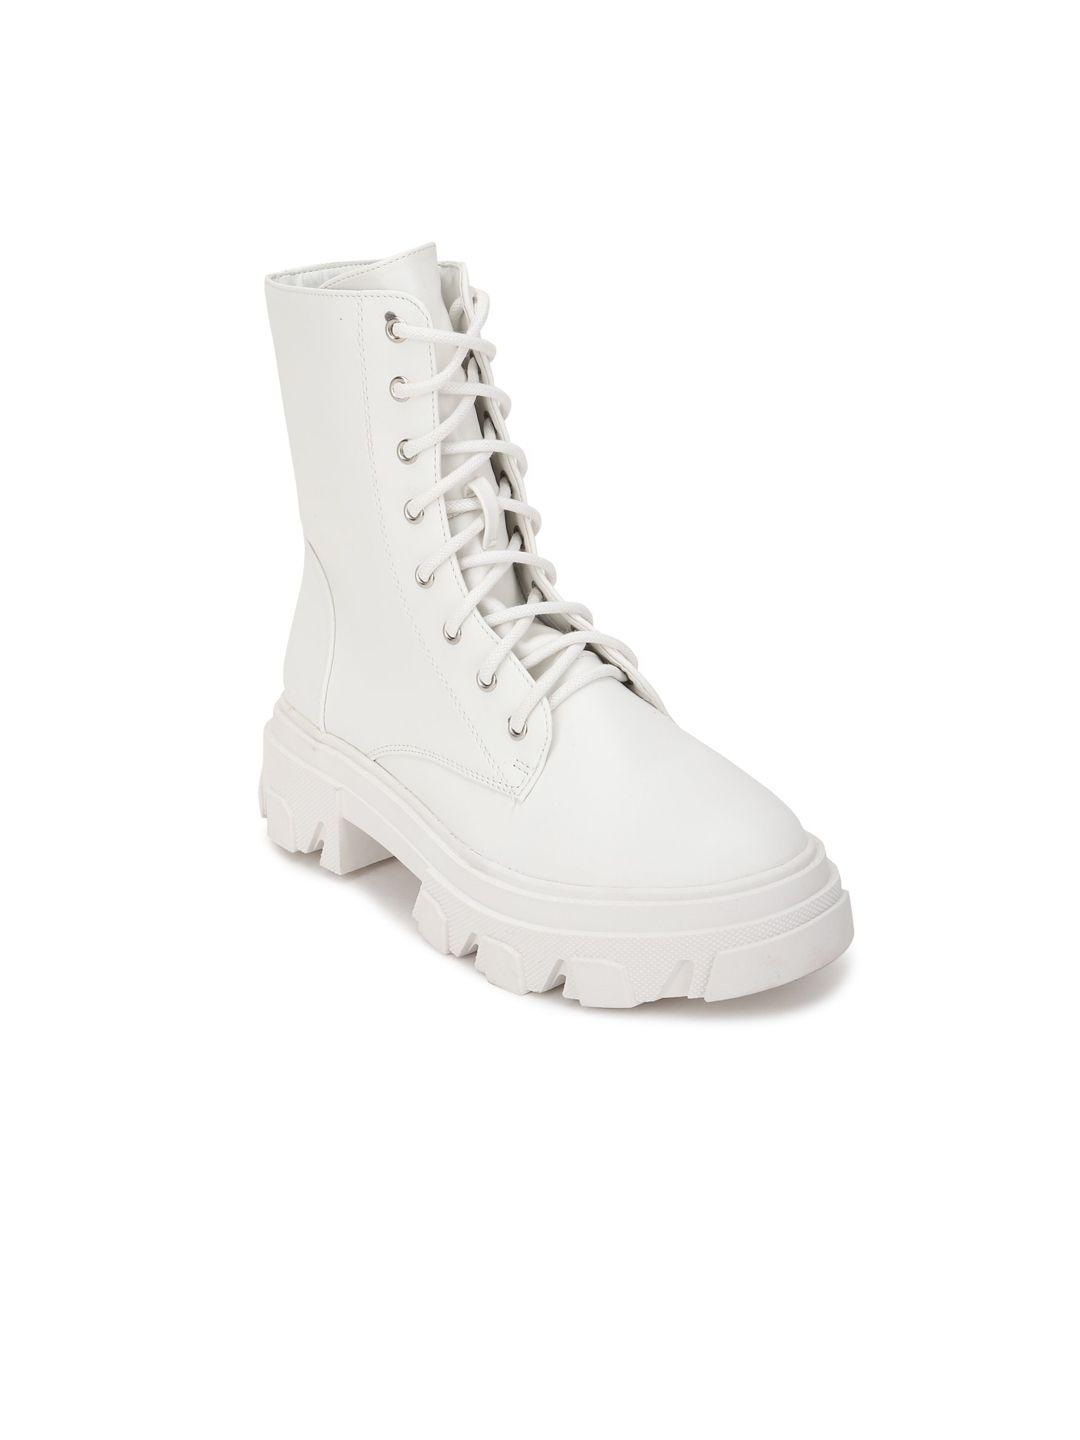 forever-21-white-pu-platform-heeled-boots